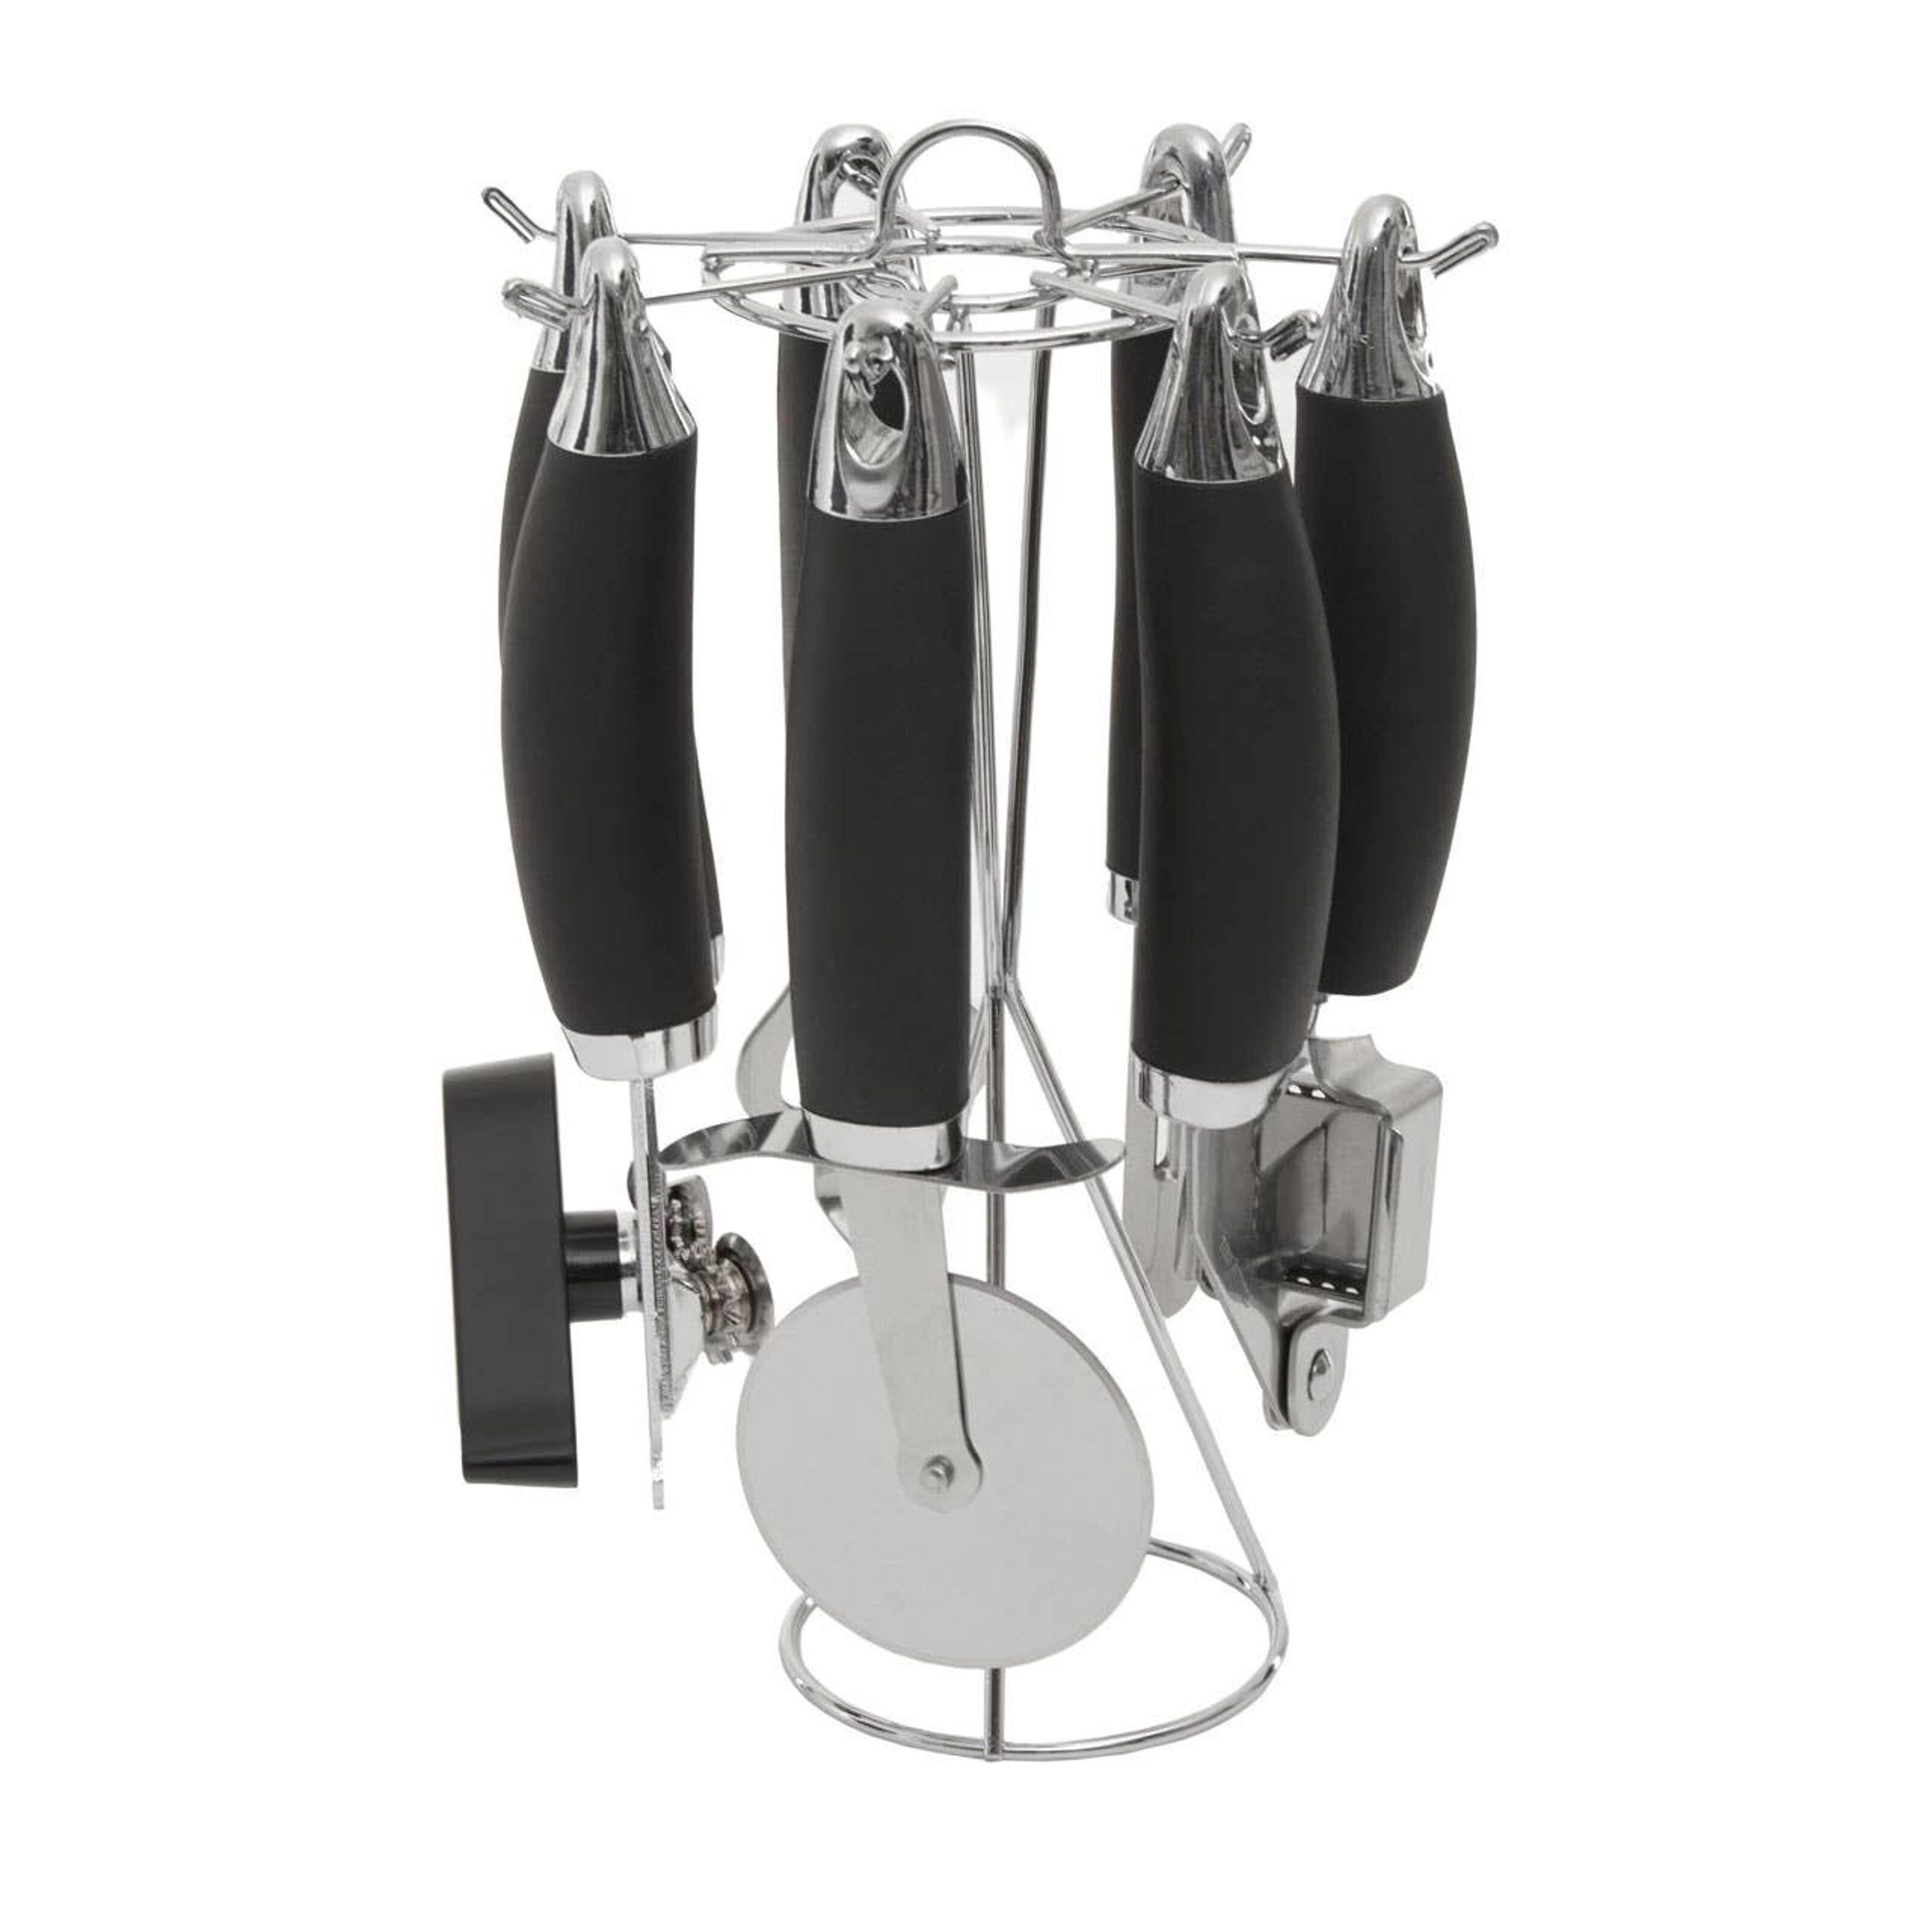 Premier Housewares Kitchen Gadget Set with Stand - 6-Pieces